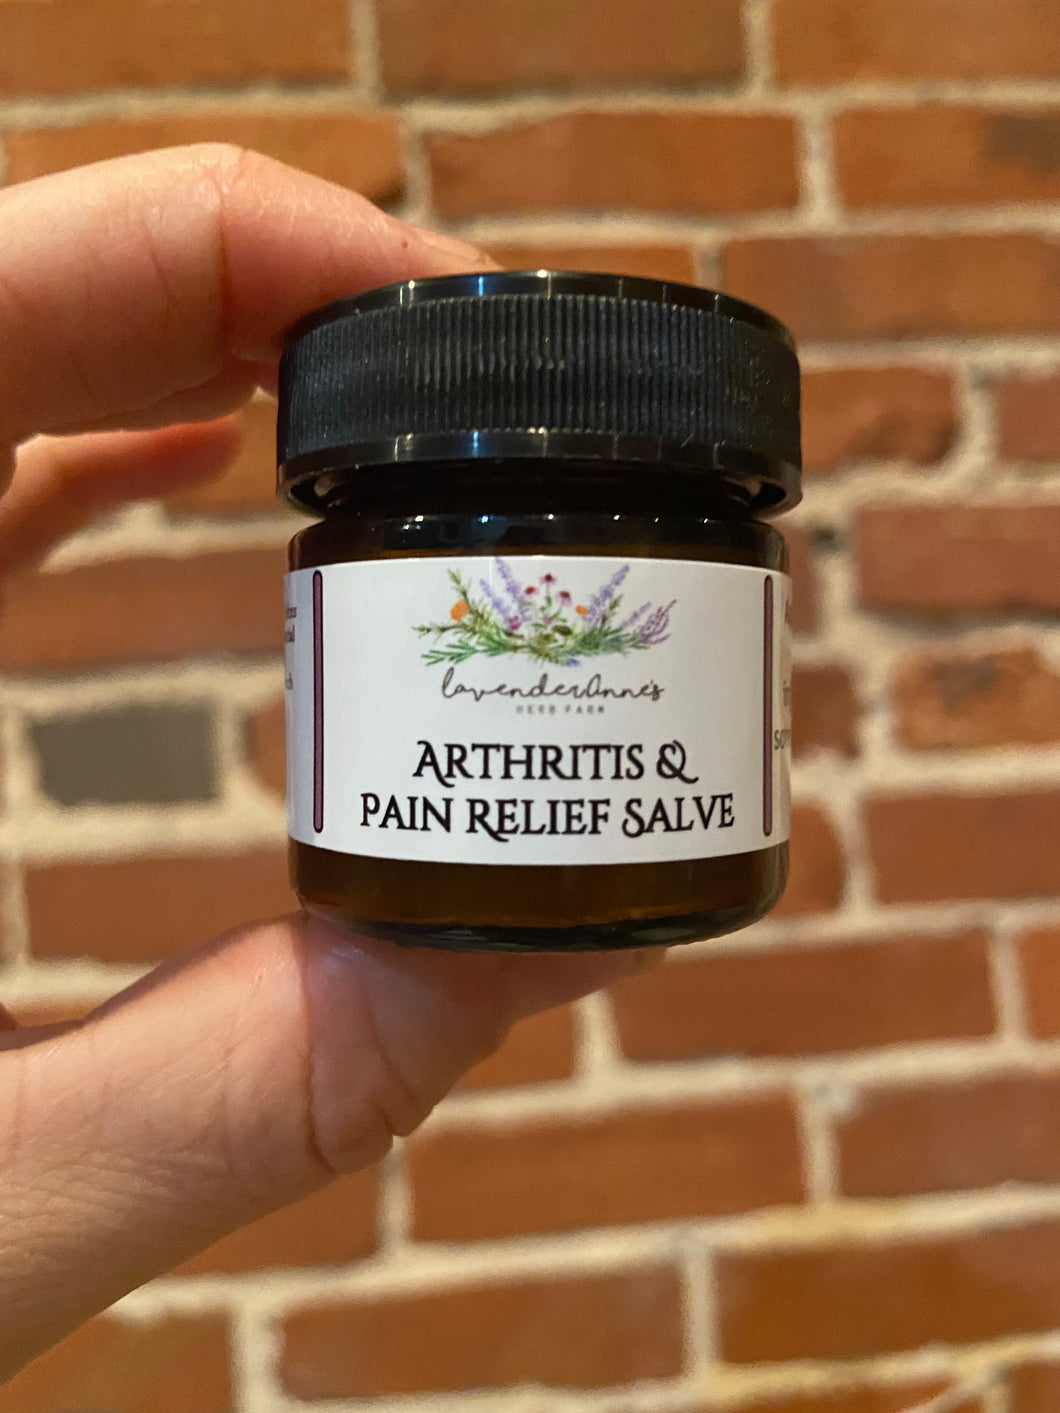 Arthritis & Pain Relief Salve